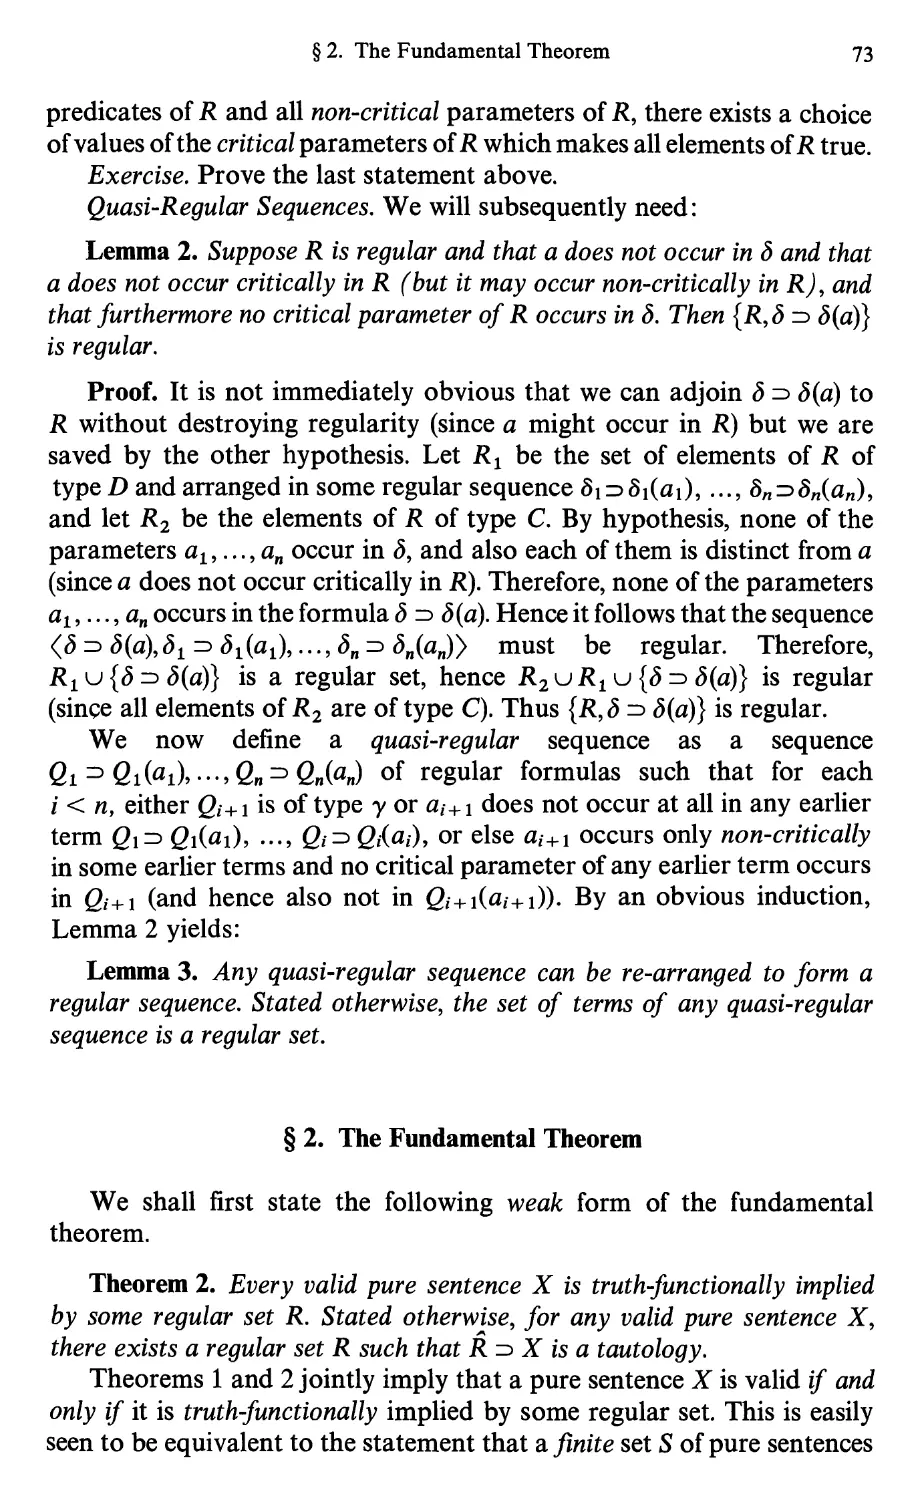 7.2 The Fundamental Theorem